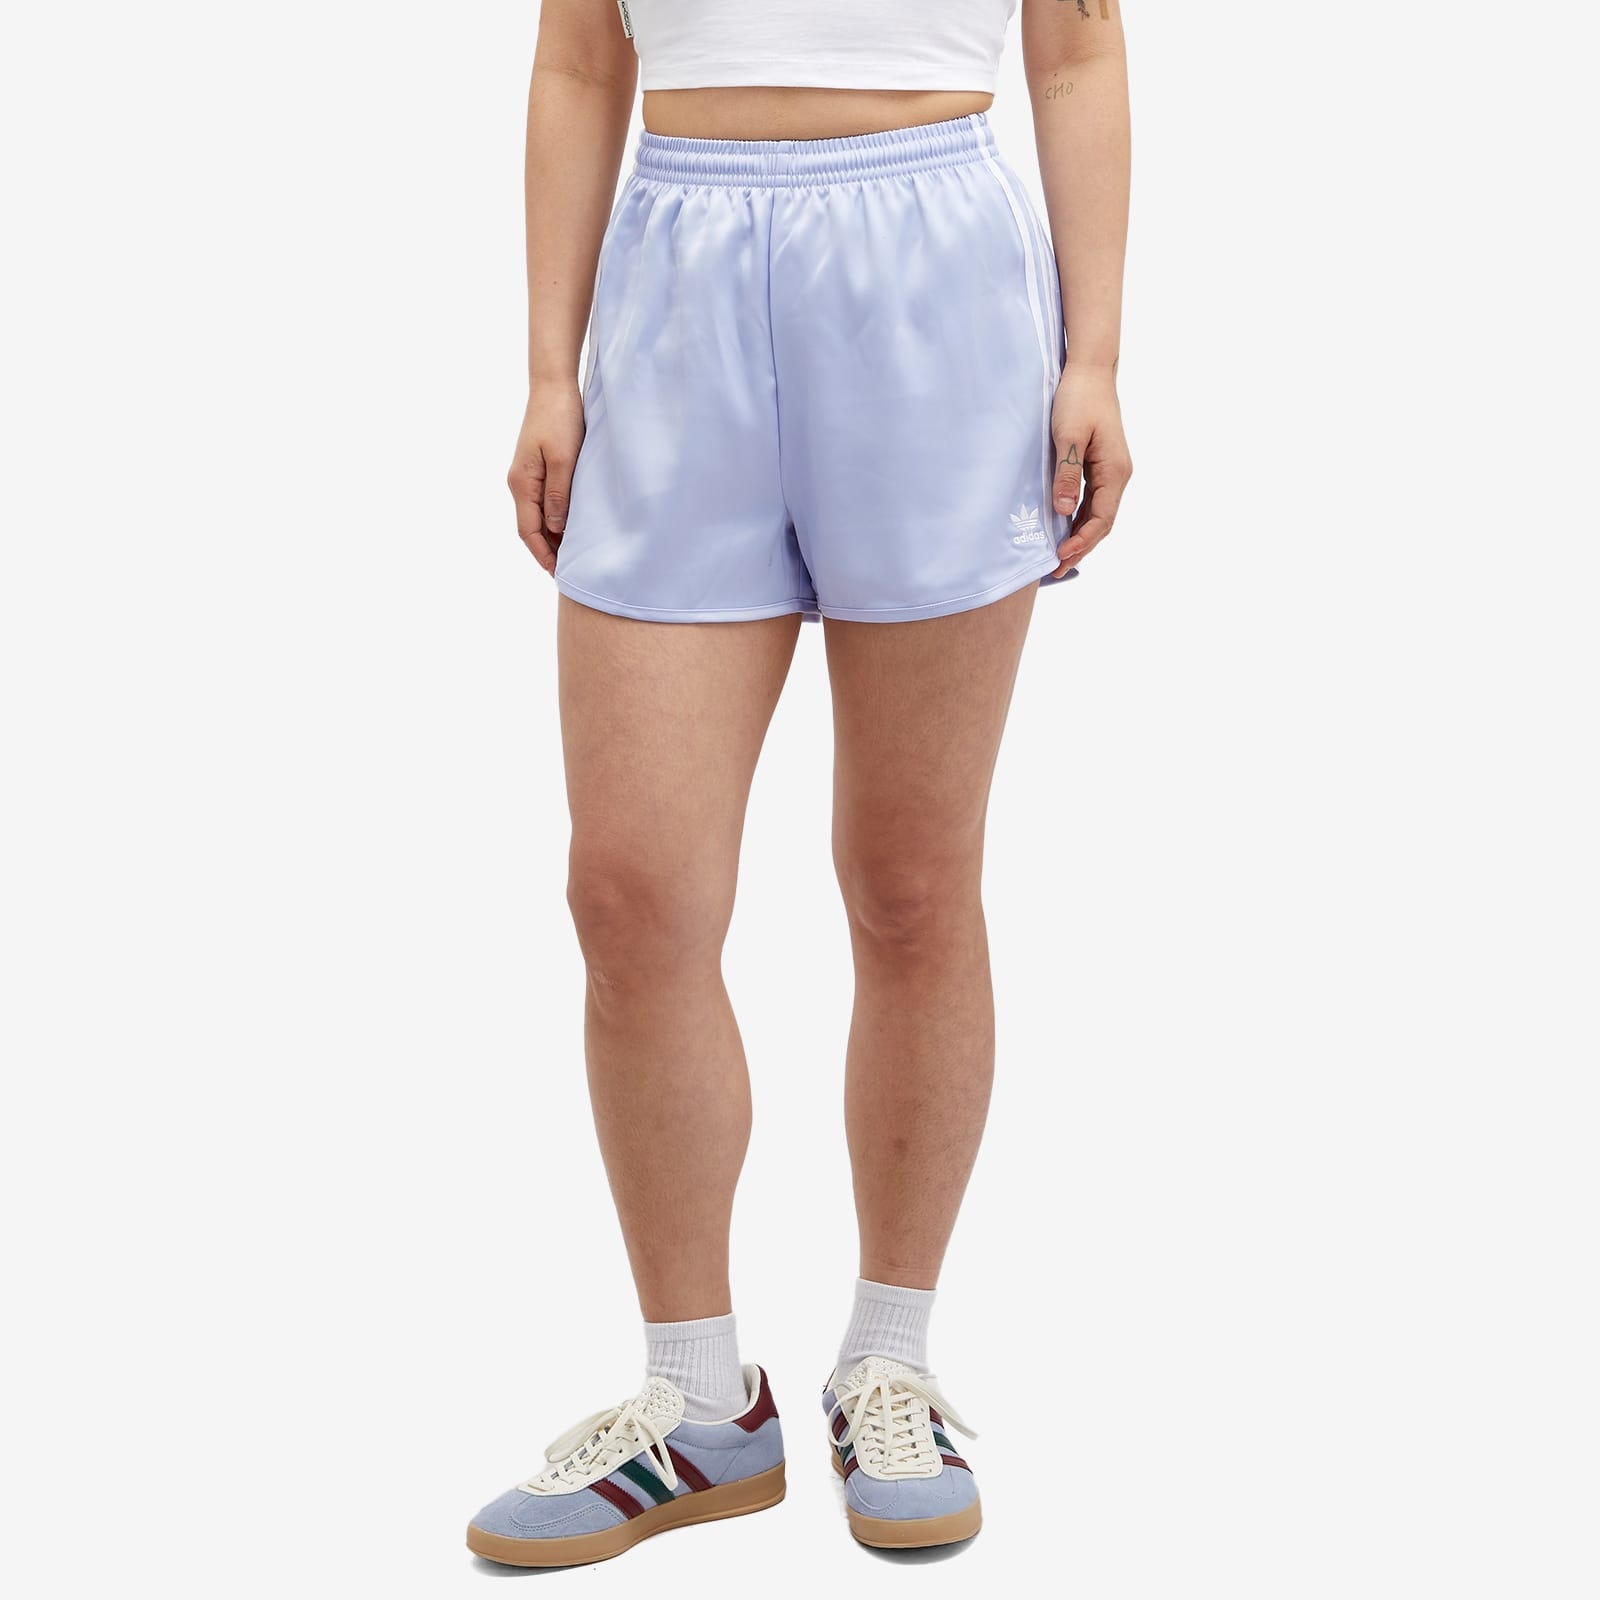 Adidas Sprint Shorts - 2